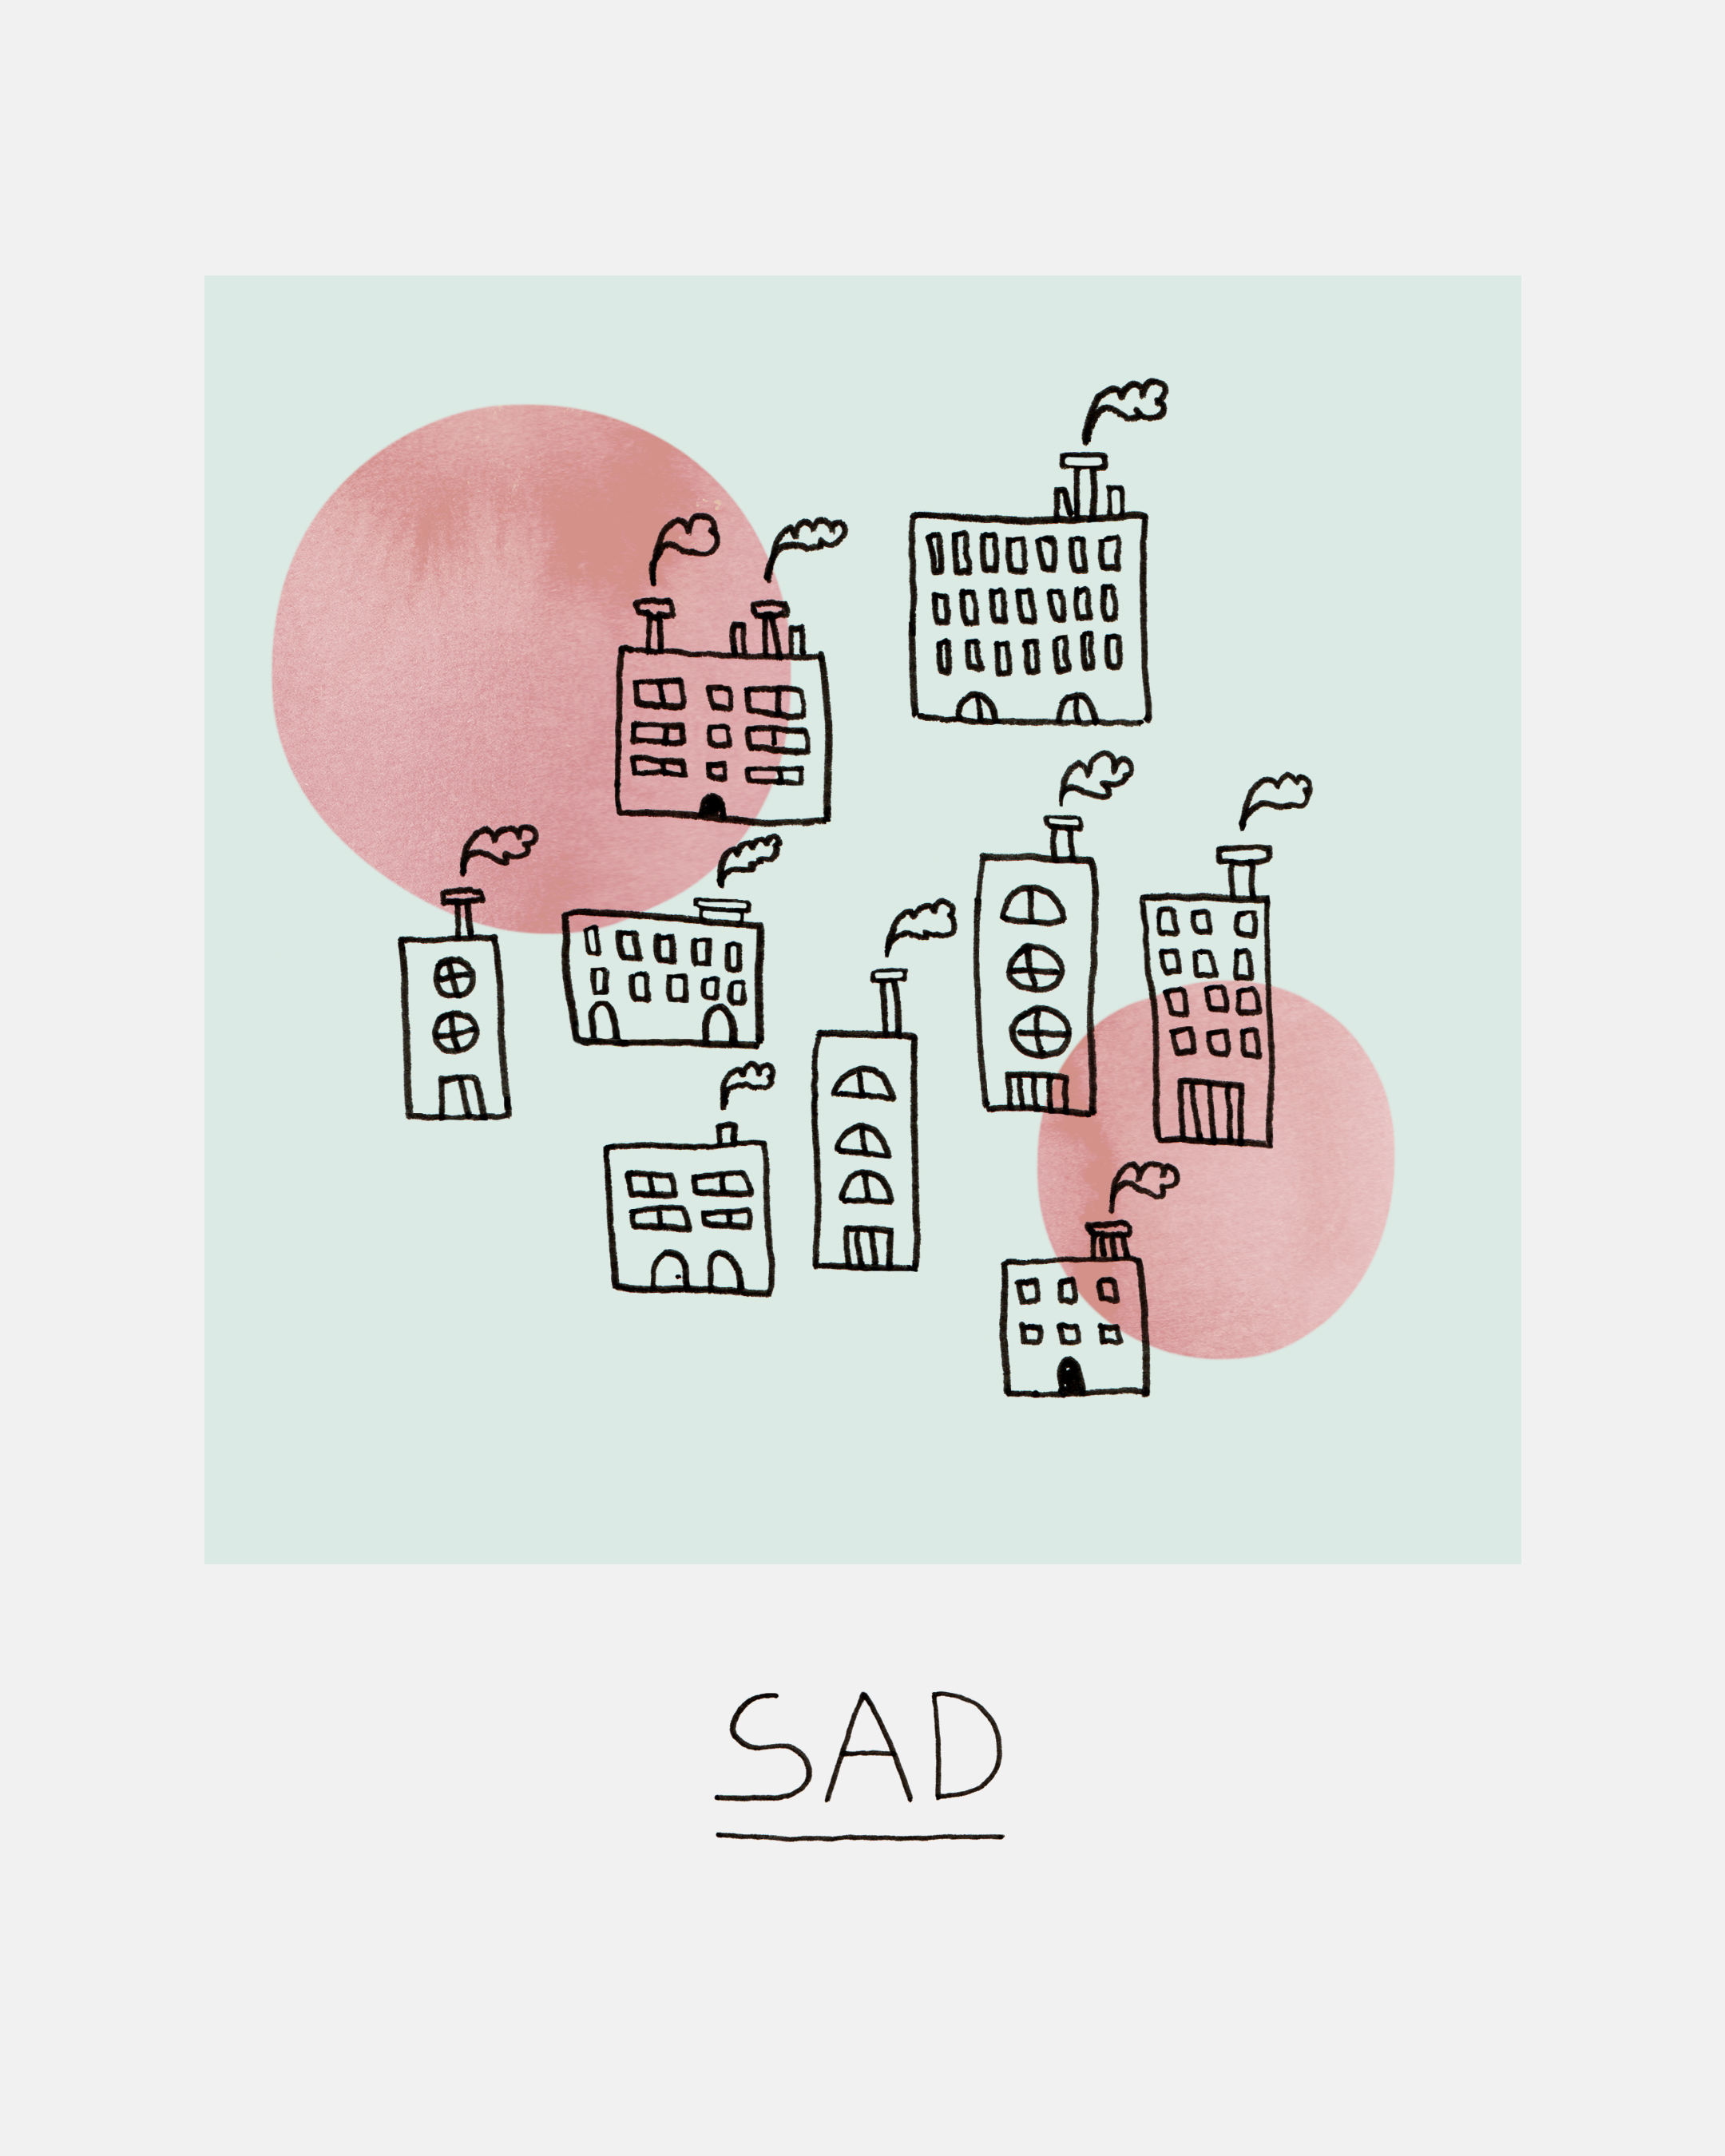 The Sad Happy project